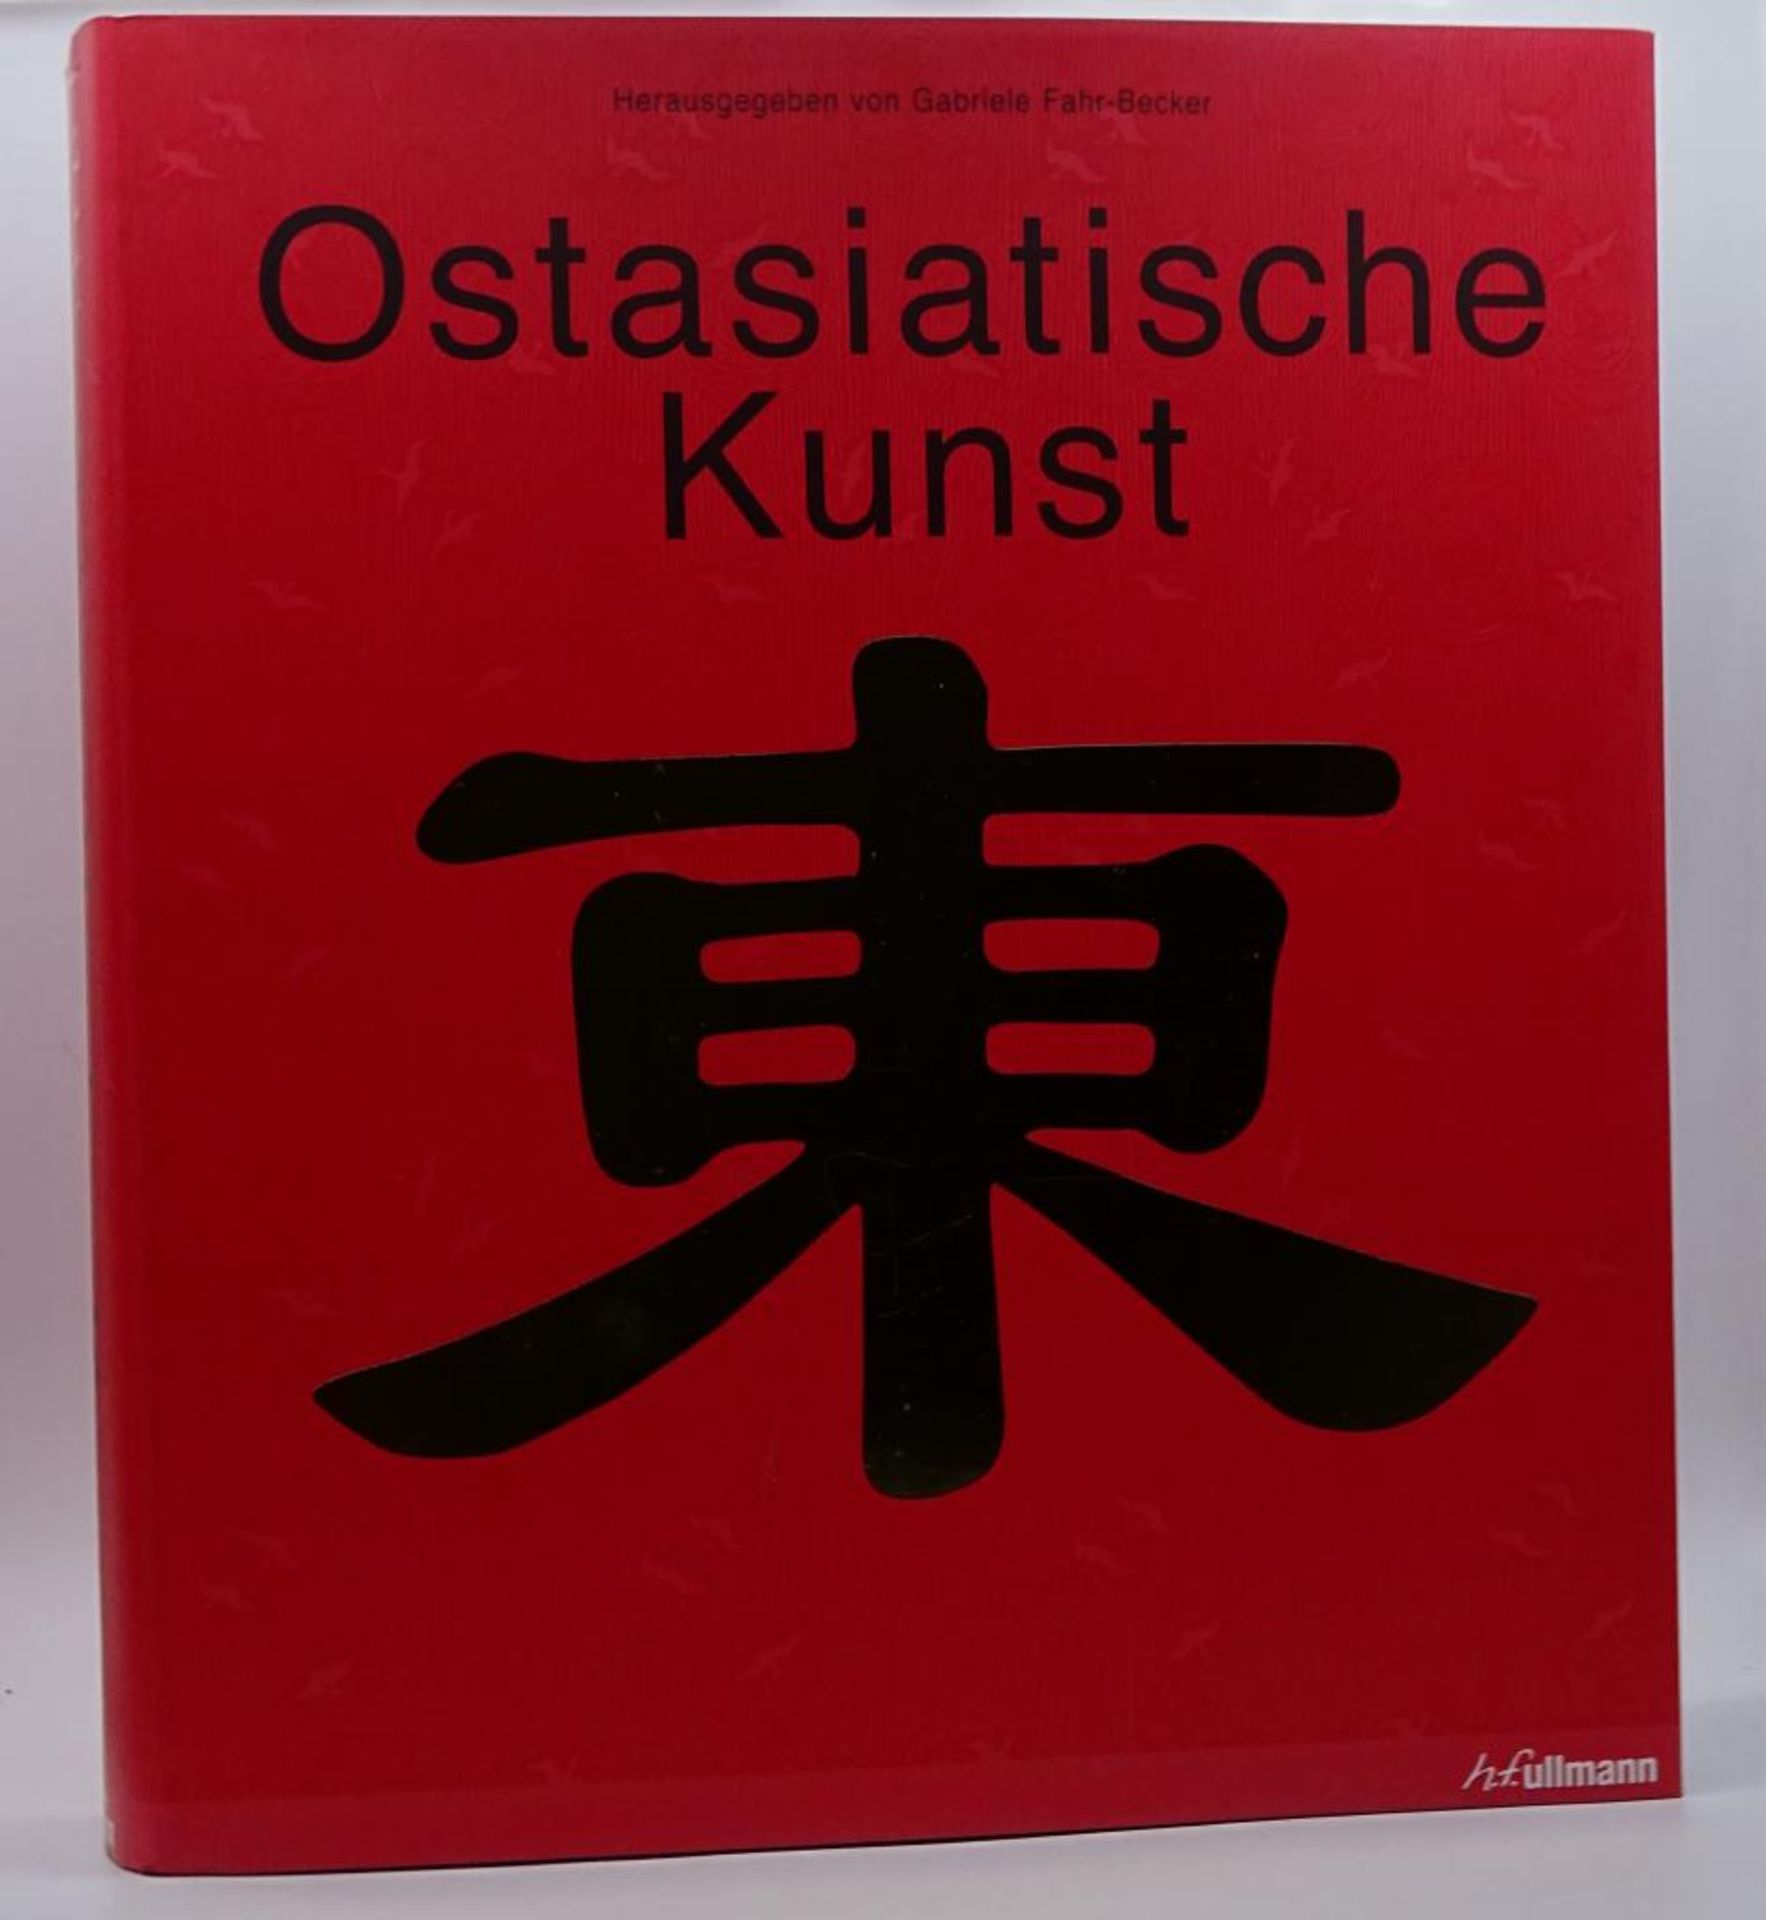 Großband "Ostasiatische Kunst", 2006, (schweres Buch!